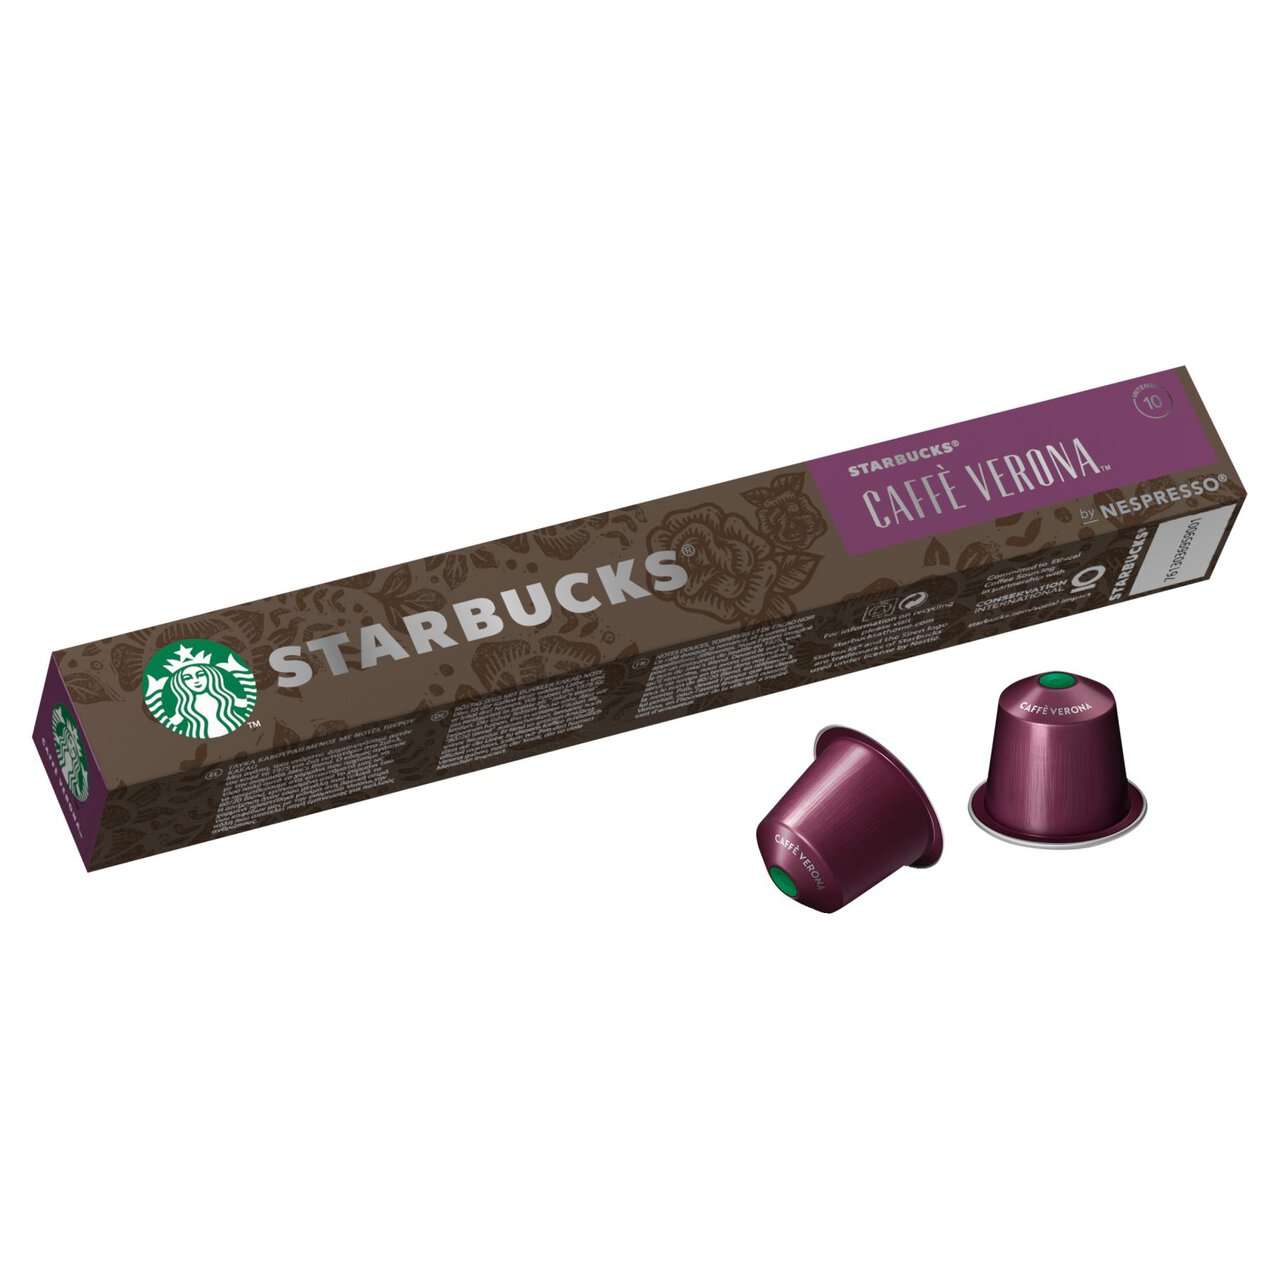 STARBUCKS by NESPRESSO CAFFE VERONA Espresso Coffee Pods 10 per pack